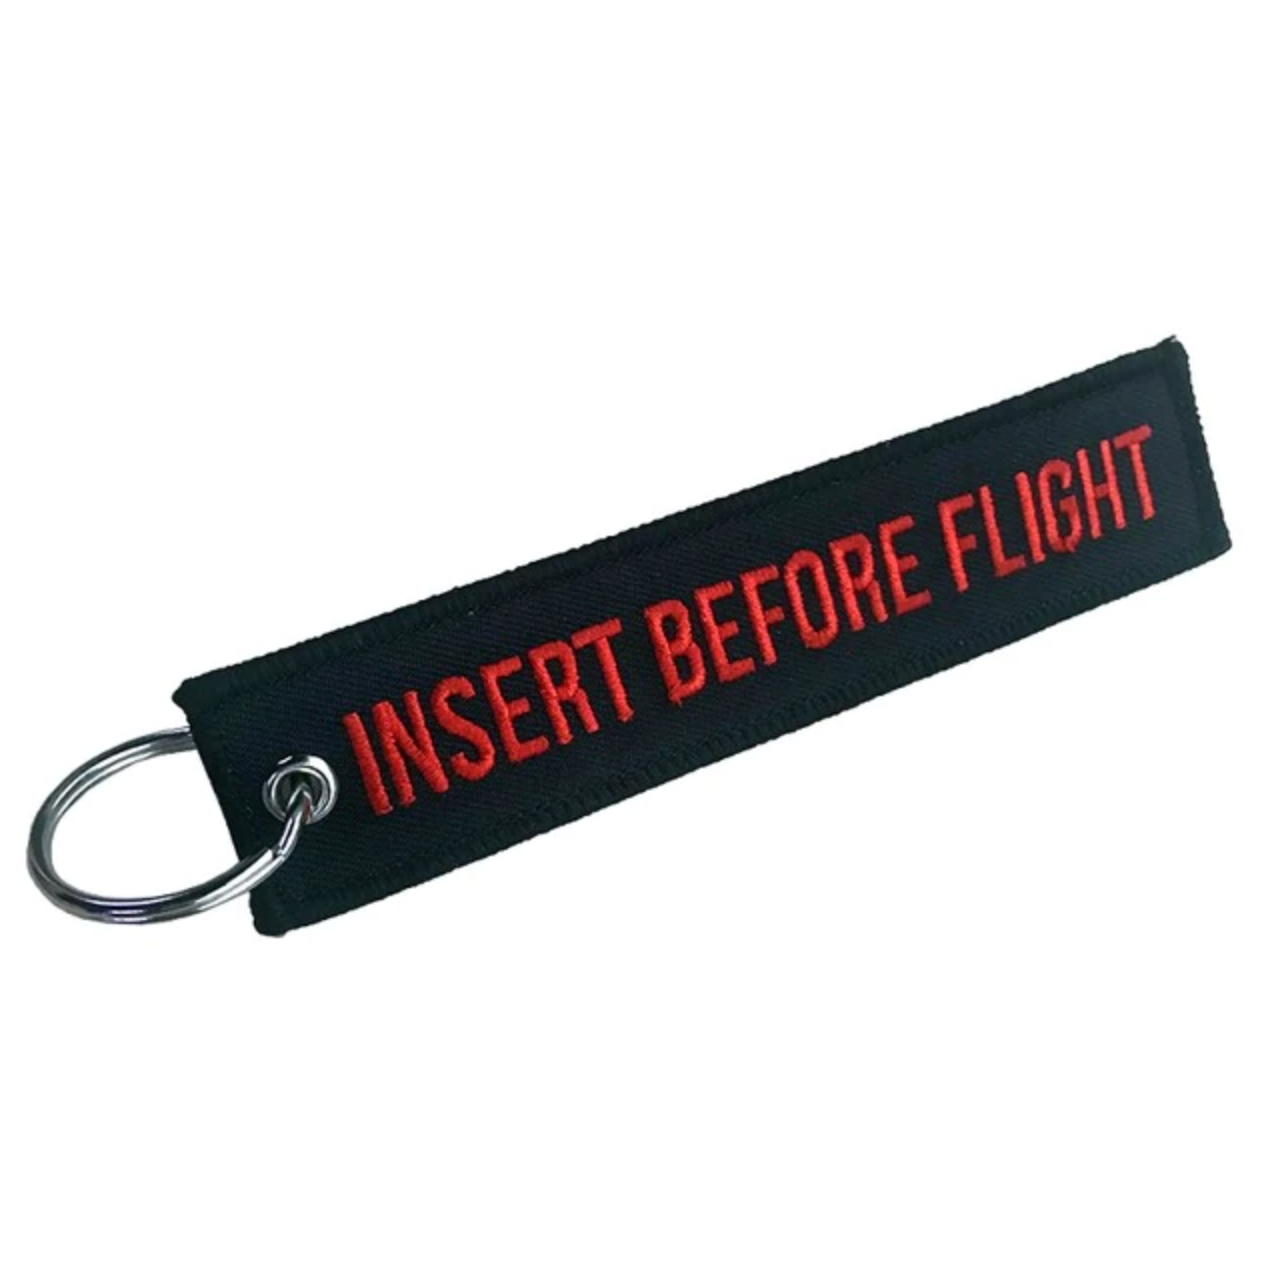 Insert Before Flight (Black&Red) Designed Key Chains